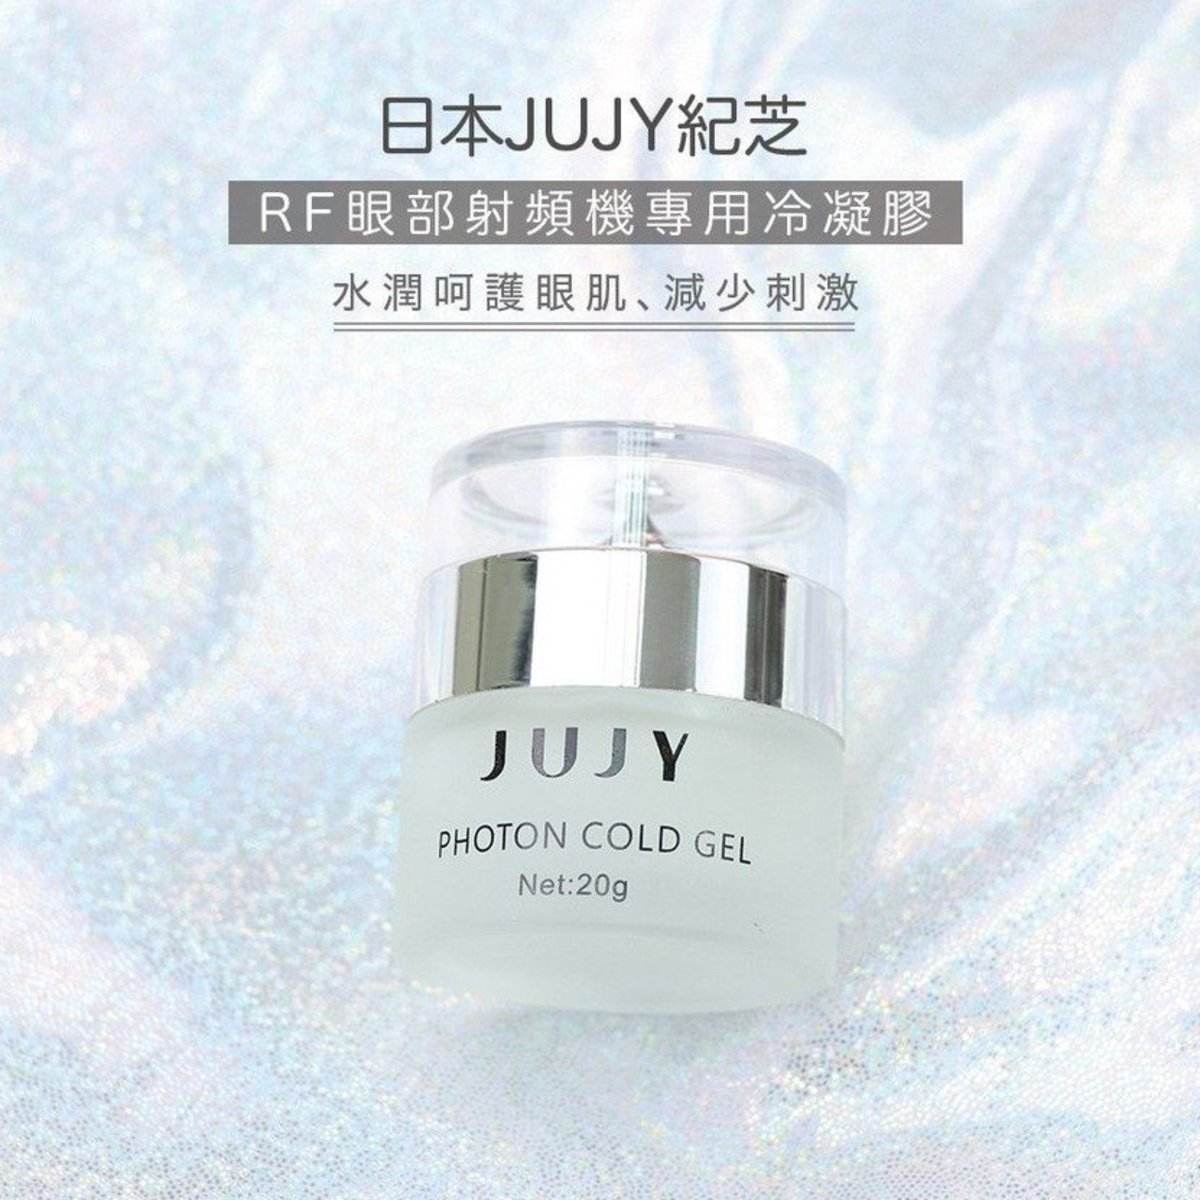 Jujy - Special Eye Gel for RF Radio Frequency Eye Beauty Device｜Photon Cold Gel